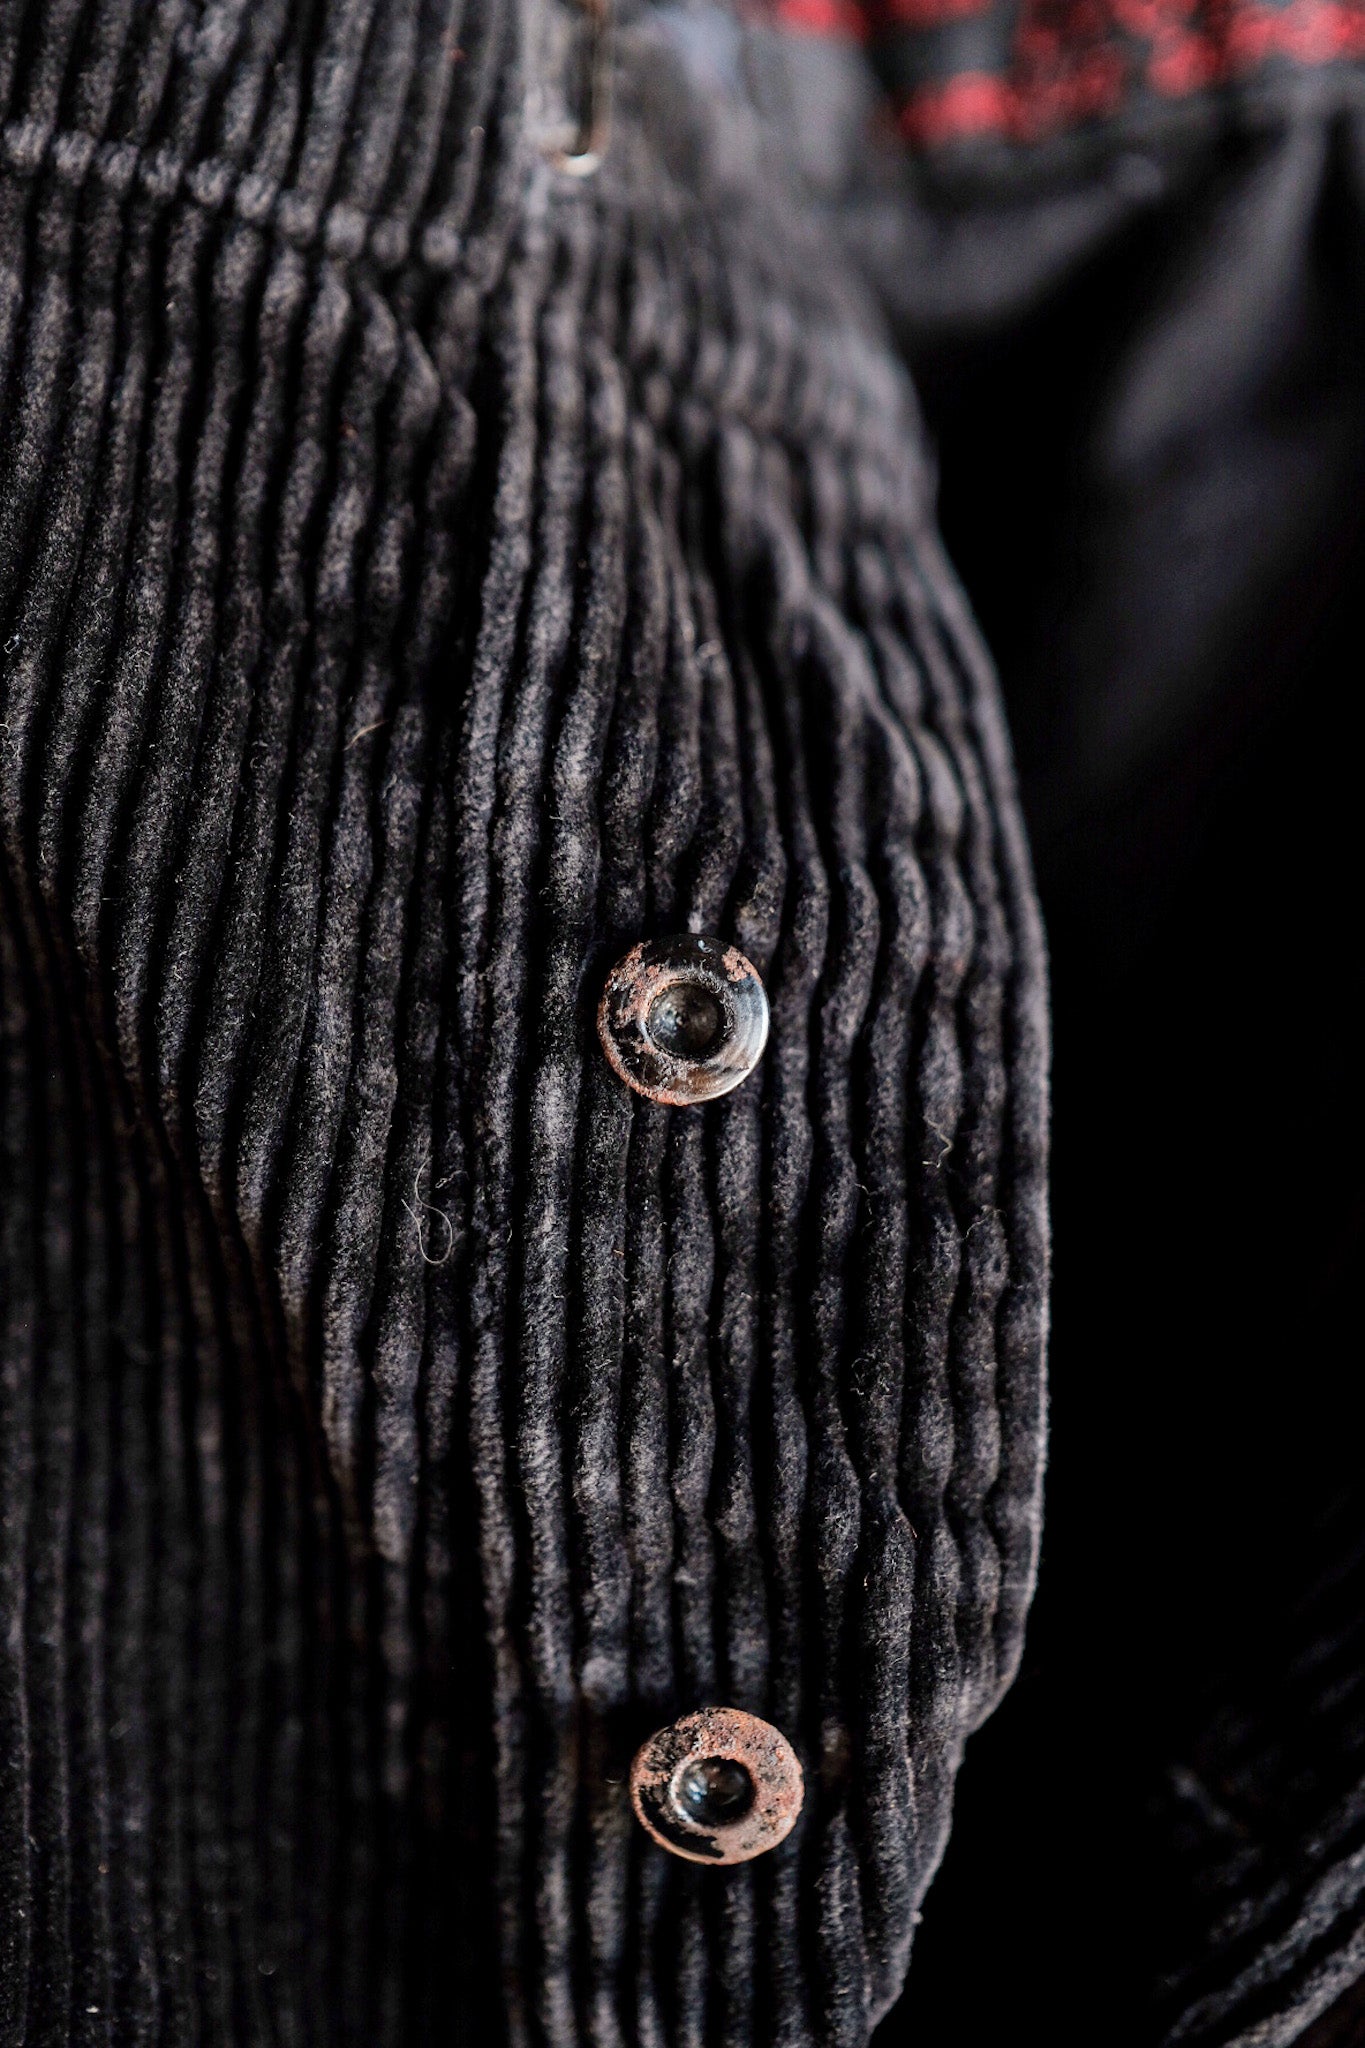 【~40's】French Vintage Black Corduroy Work Pants "Adolphe Lafont"